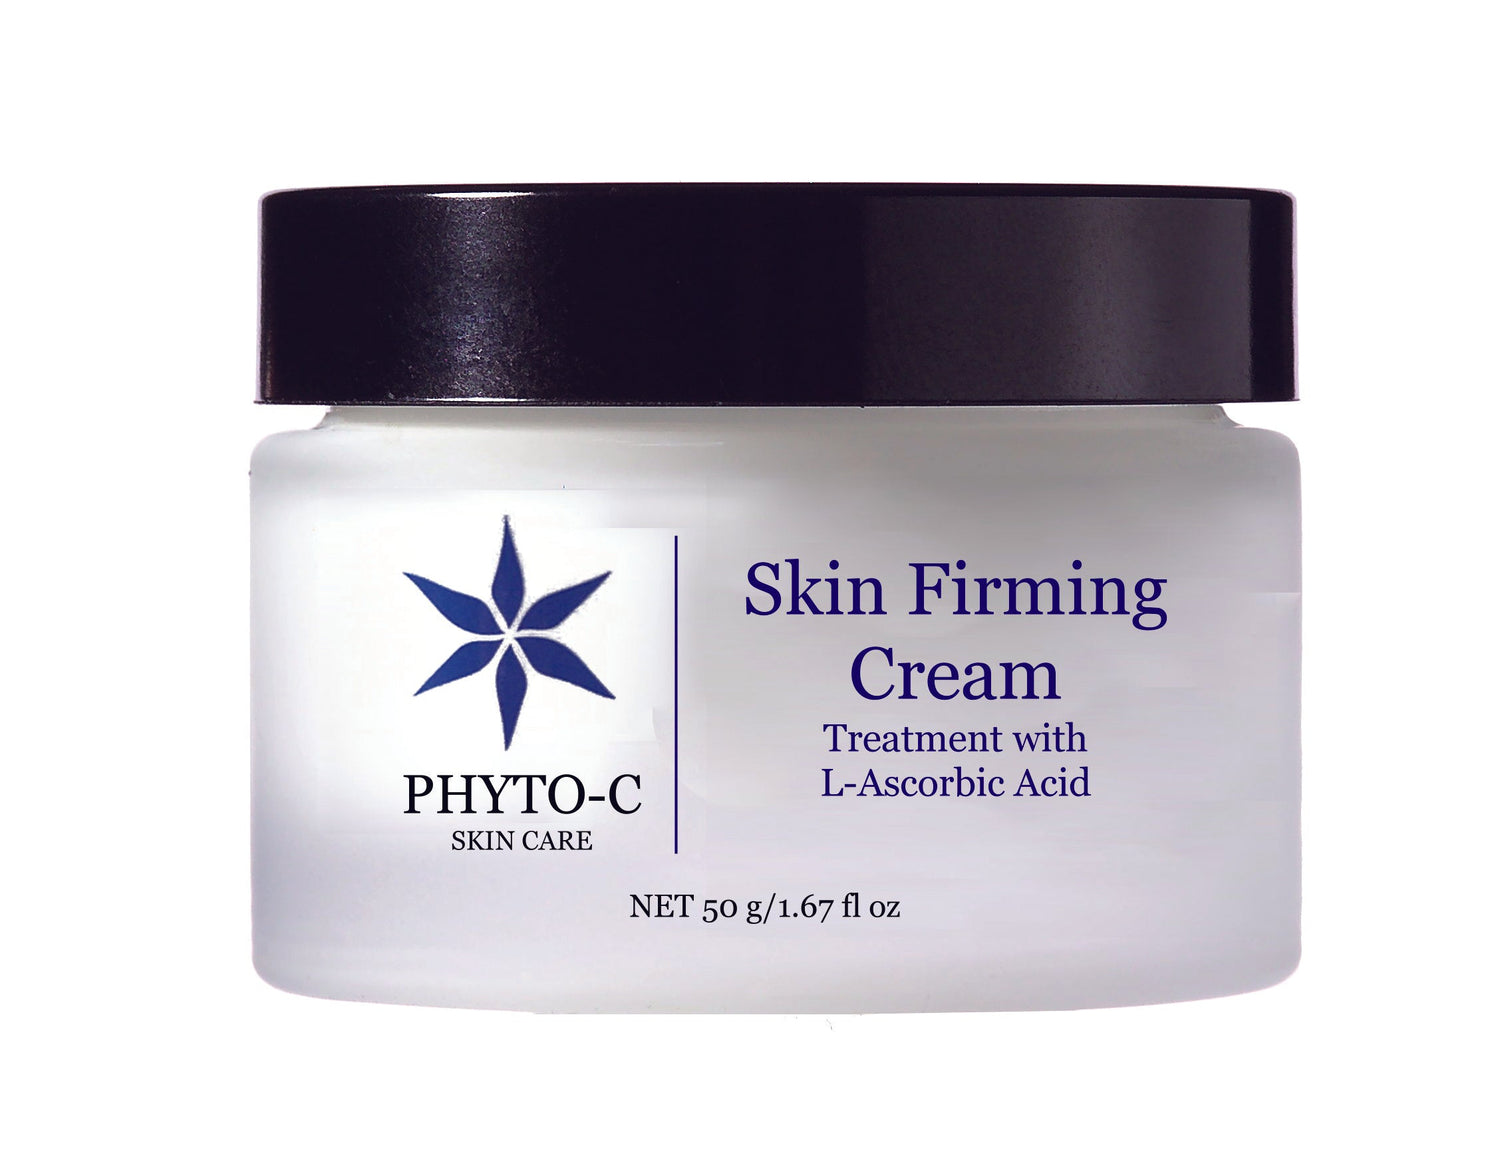 Skin Firming Cream offer